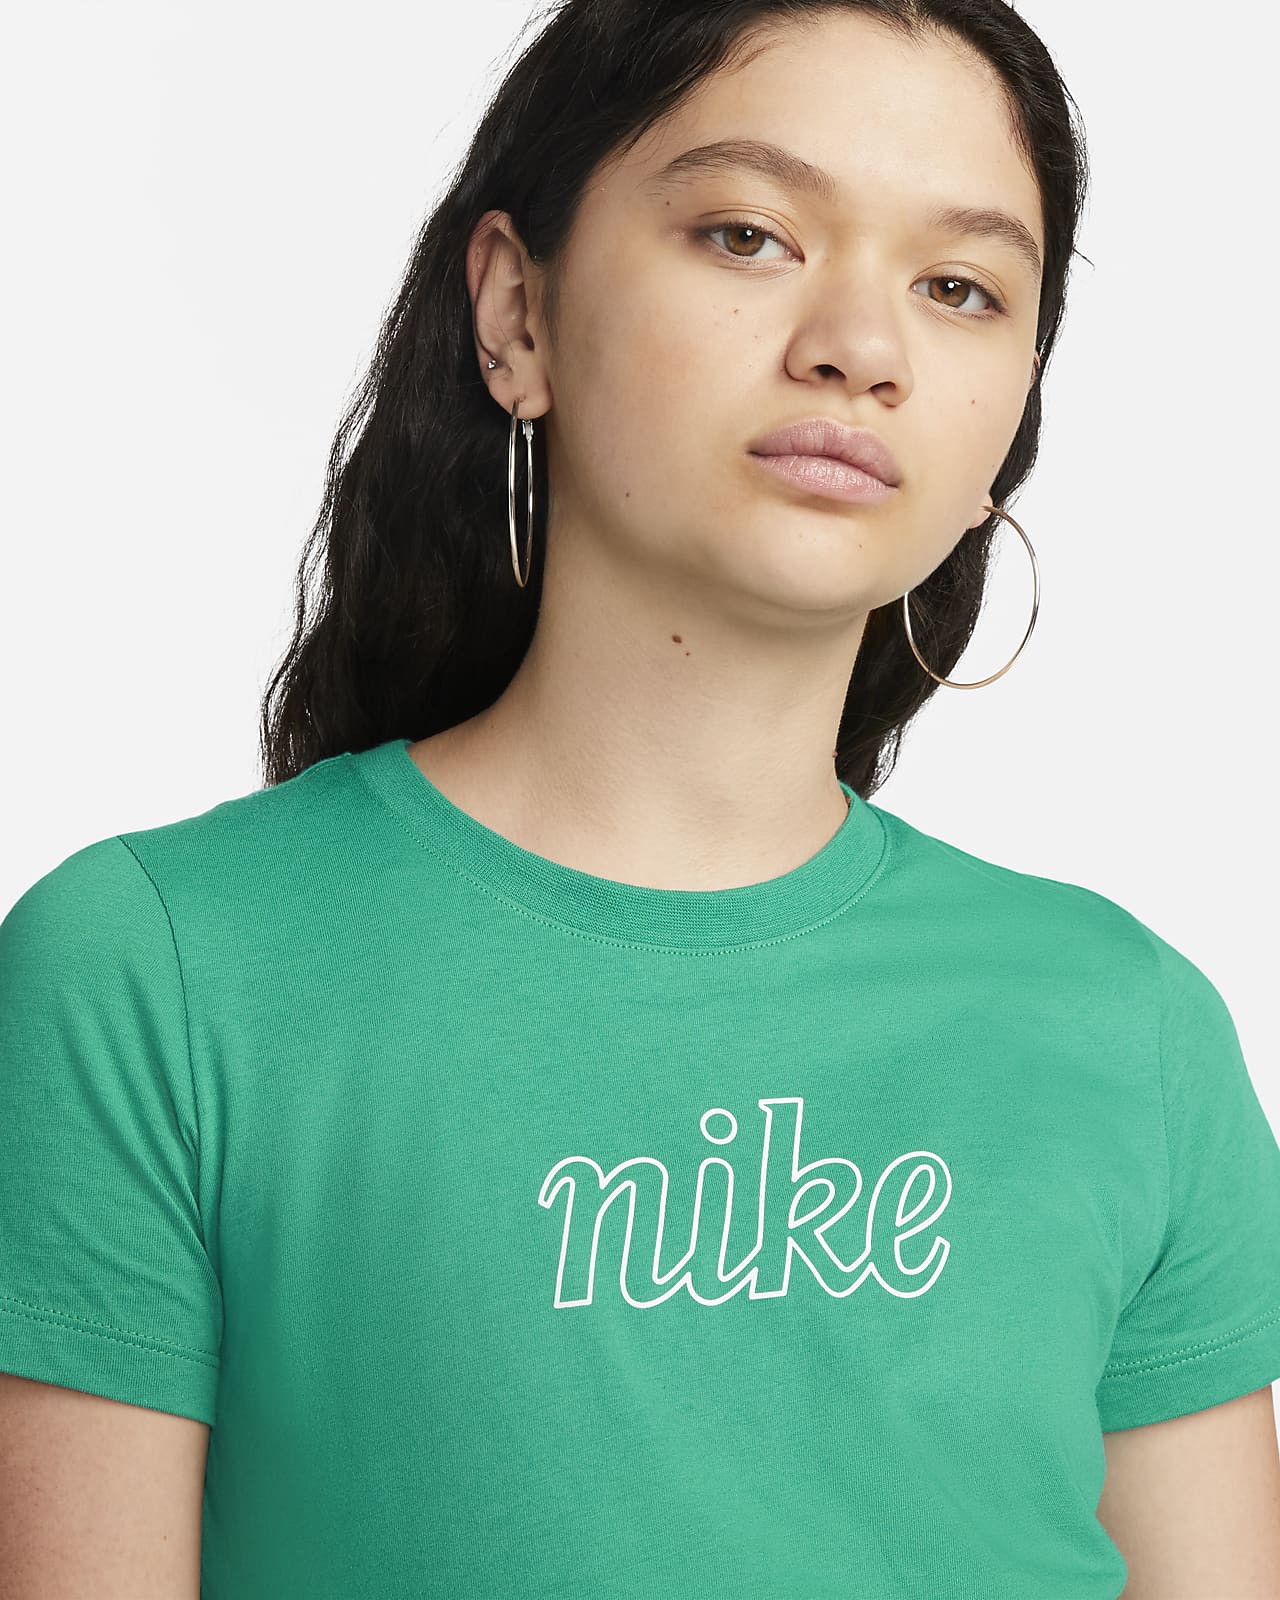 Nike Sportswear Icon Clash Women's T-Shirt